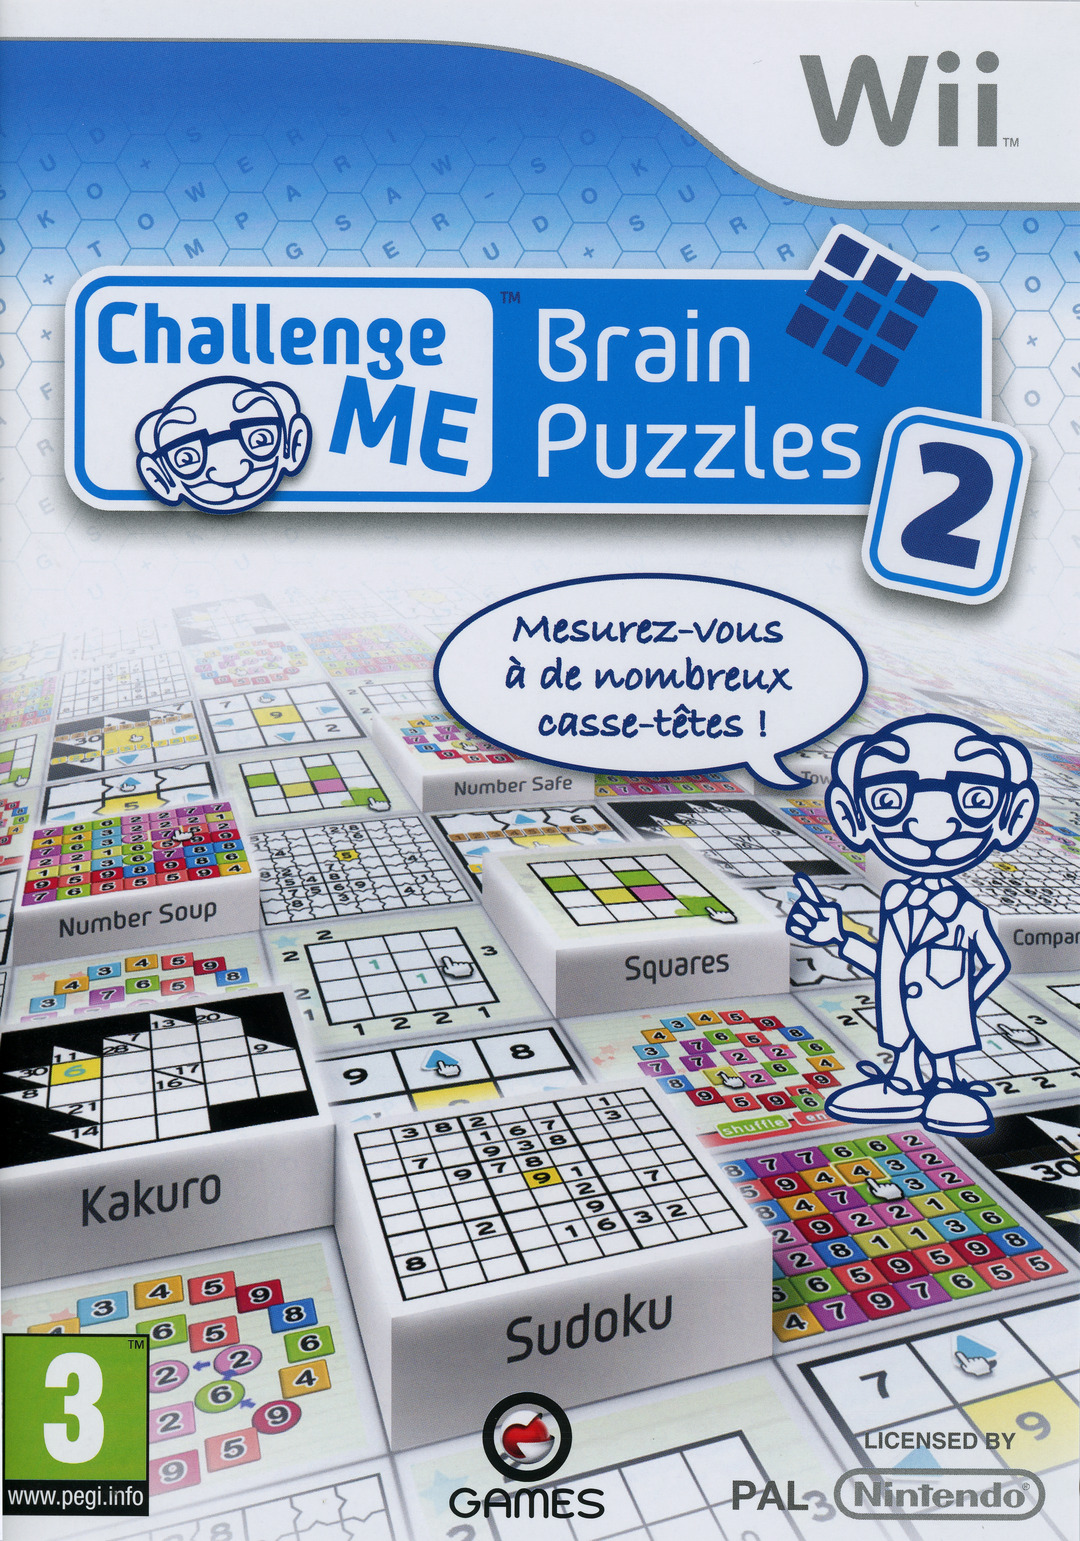 Игра brain puzzle. Brain Puzzle игра. Головоломка NDS. Nintendo DS головоломка. Brain Puzzles логические игры.